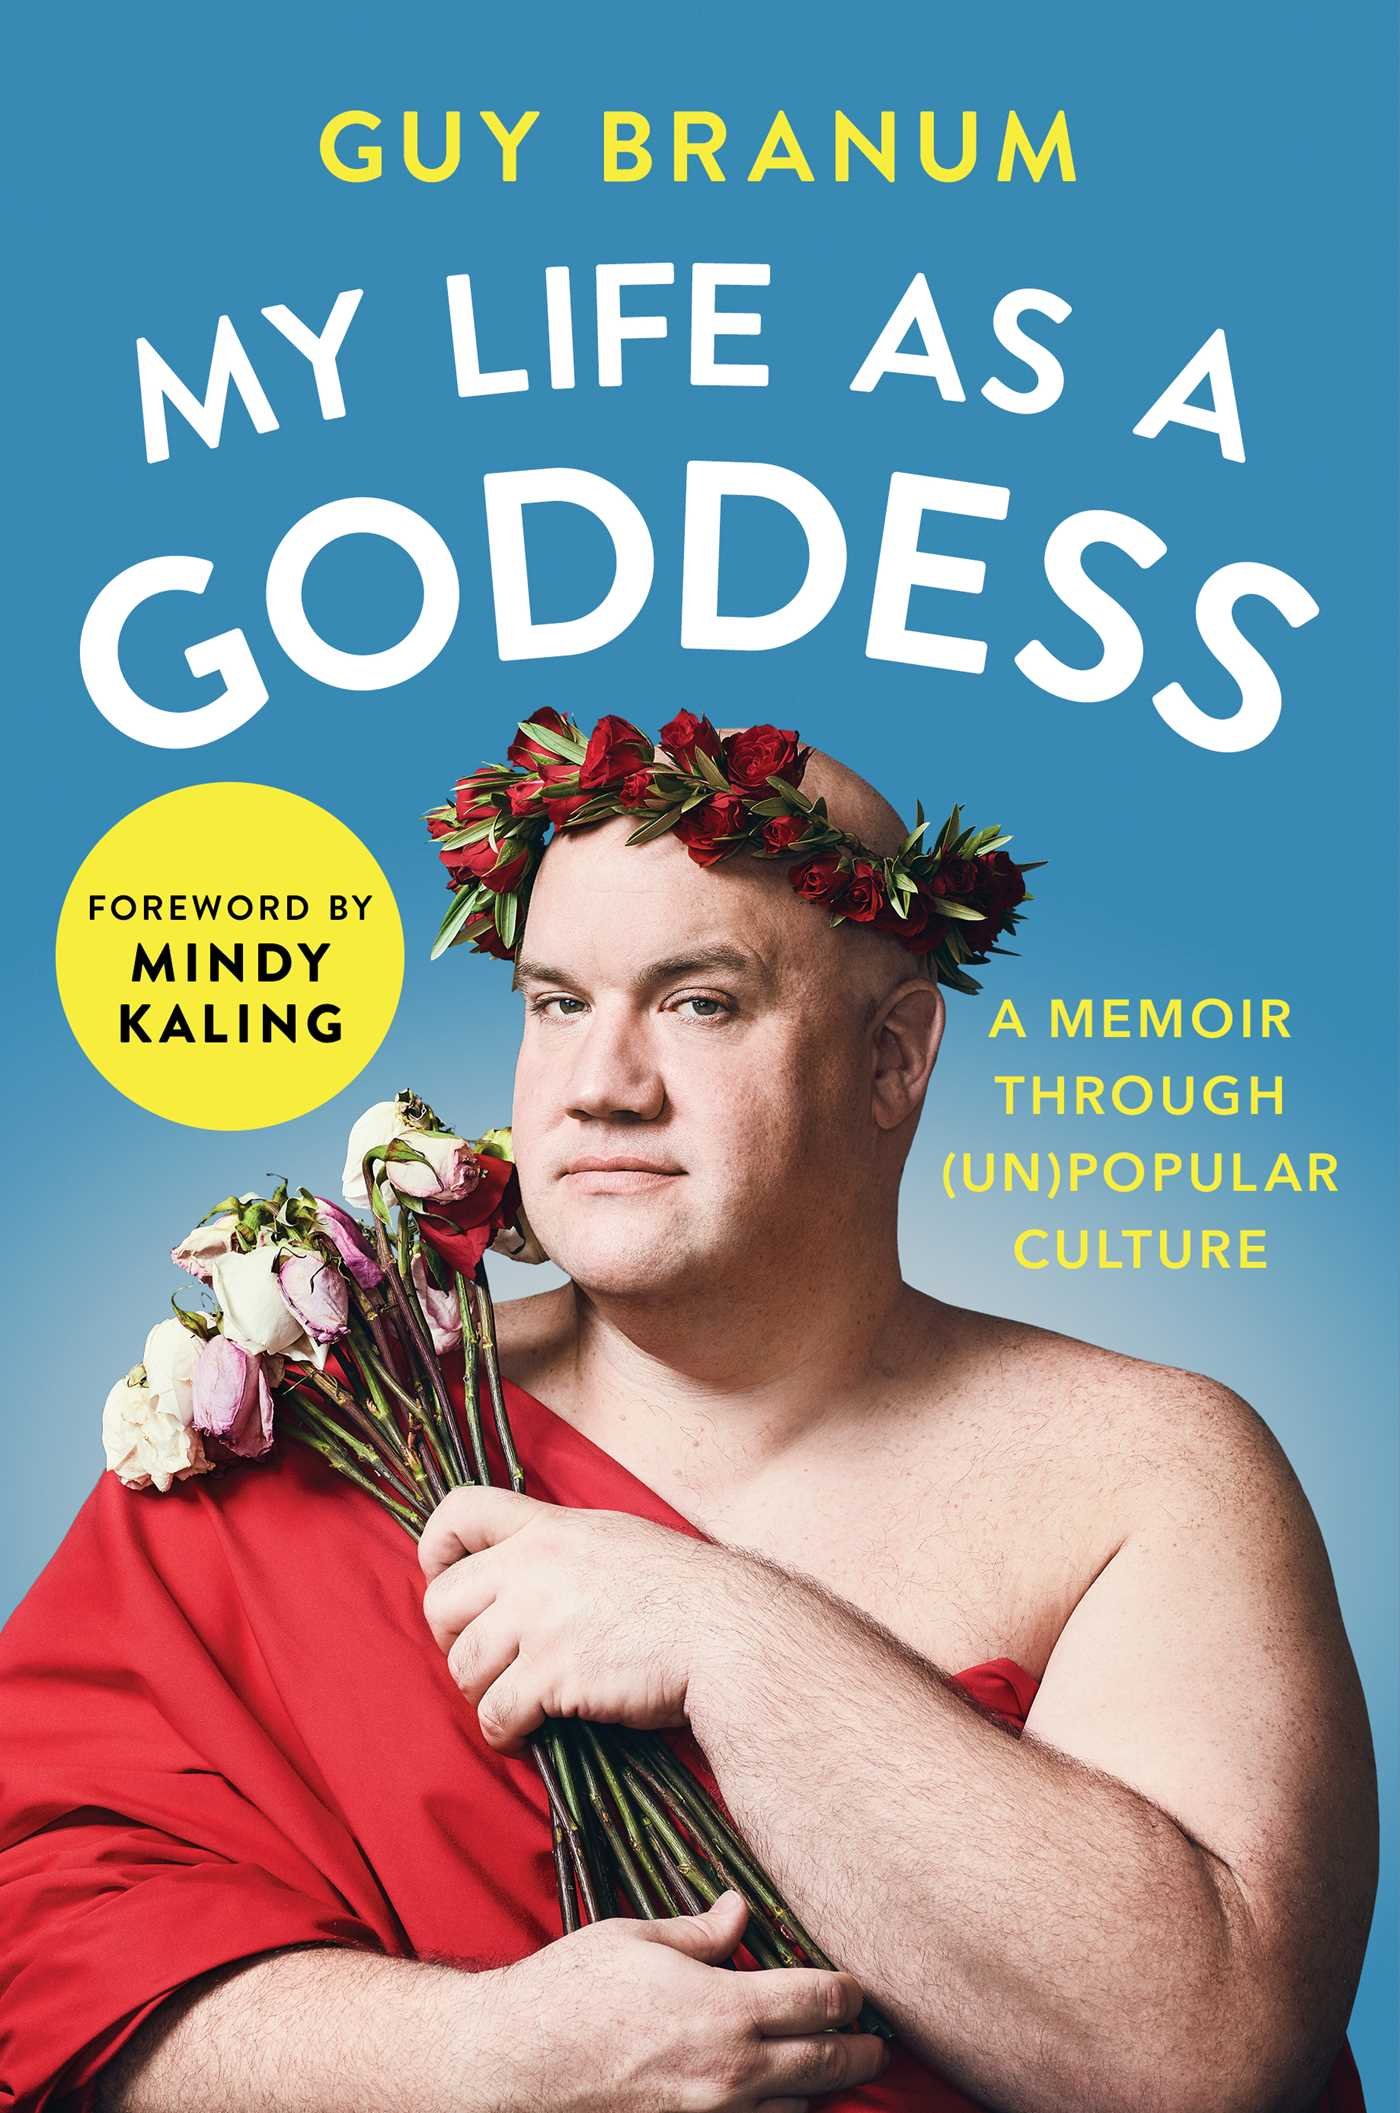 Guy Branum's "My Life as a Goddess: A Memoir Through (Un)Popular Culture"